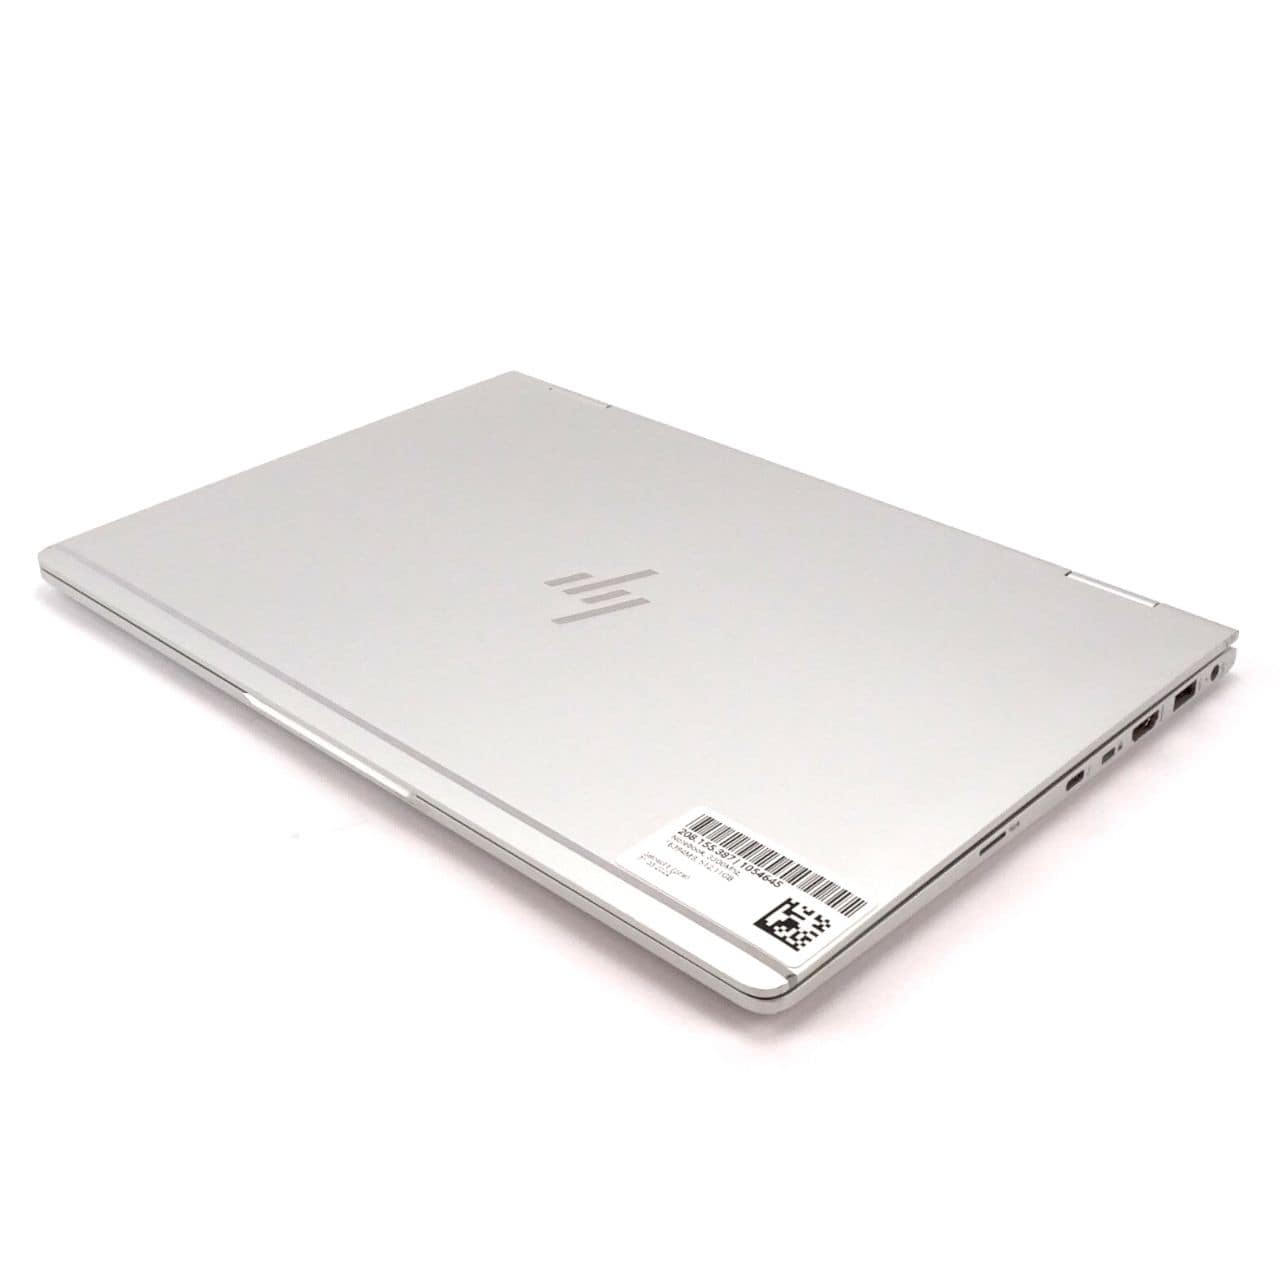 HP EliteBook x360 1030 G2 

 - 13,3 Zoll - Intel Core i5 7300U @ 2,6 GHz - 16 GB - 256 GB SSD - 1920 x 1080 FHD - Touchscreen - Windows 10 Professional - Sehr gut